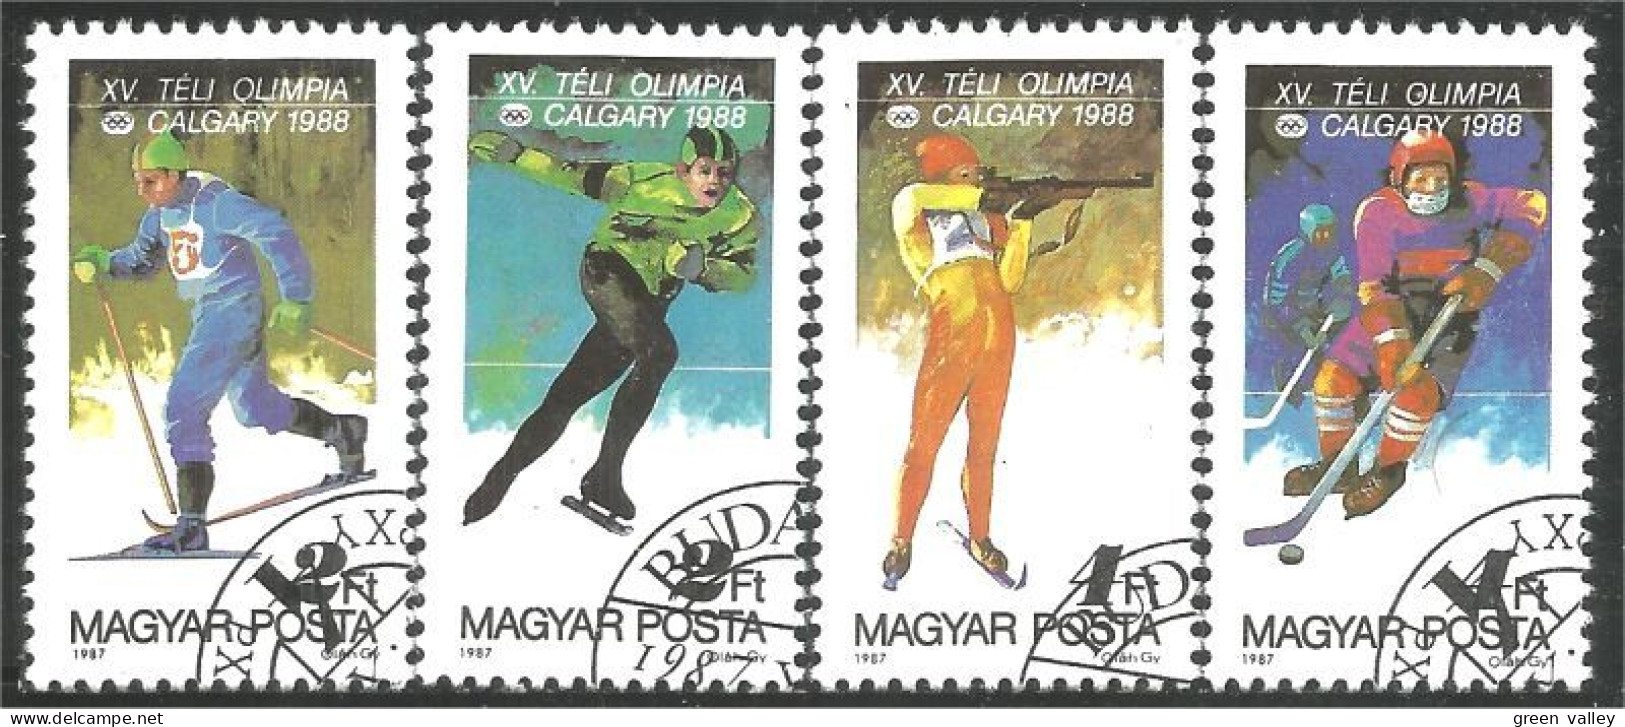 494 Hongrie Jeux Calgary 1988 Winter Games Ski Biathlon Patinage Skating Hockey Bobsled Skiing (HON-173a) - Used Stamps